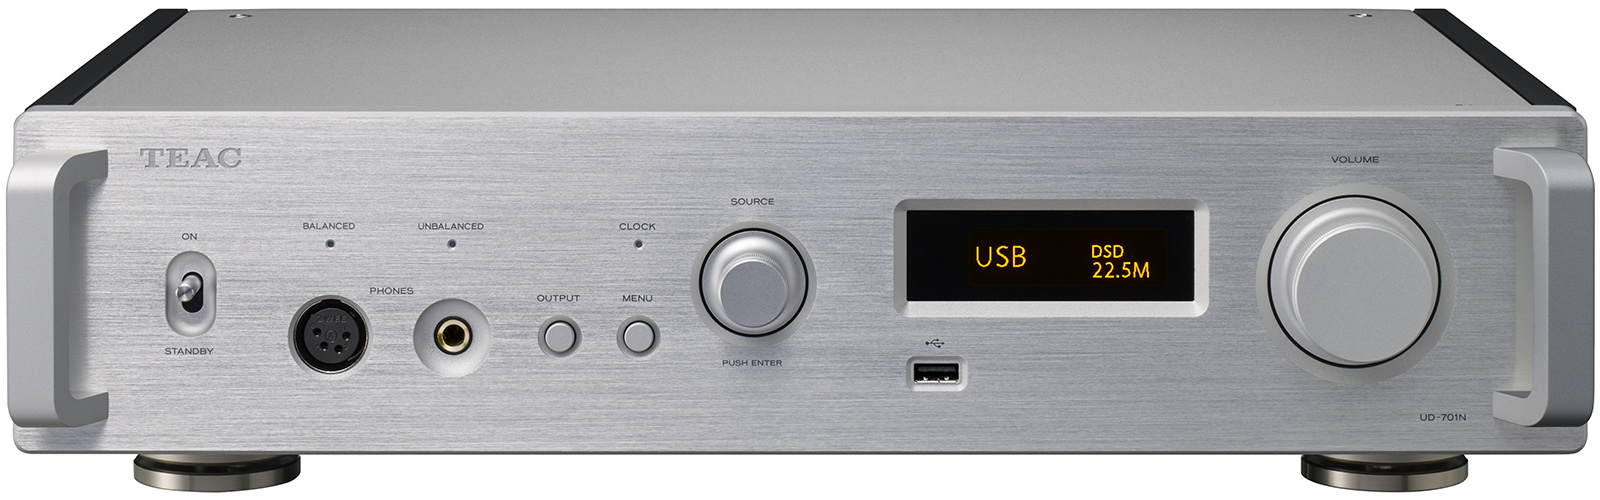 Сетевые аудио проигрыватели Teac UD-701N silver сетевые аудио проигрыватели aurender a15 4tb silver